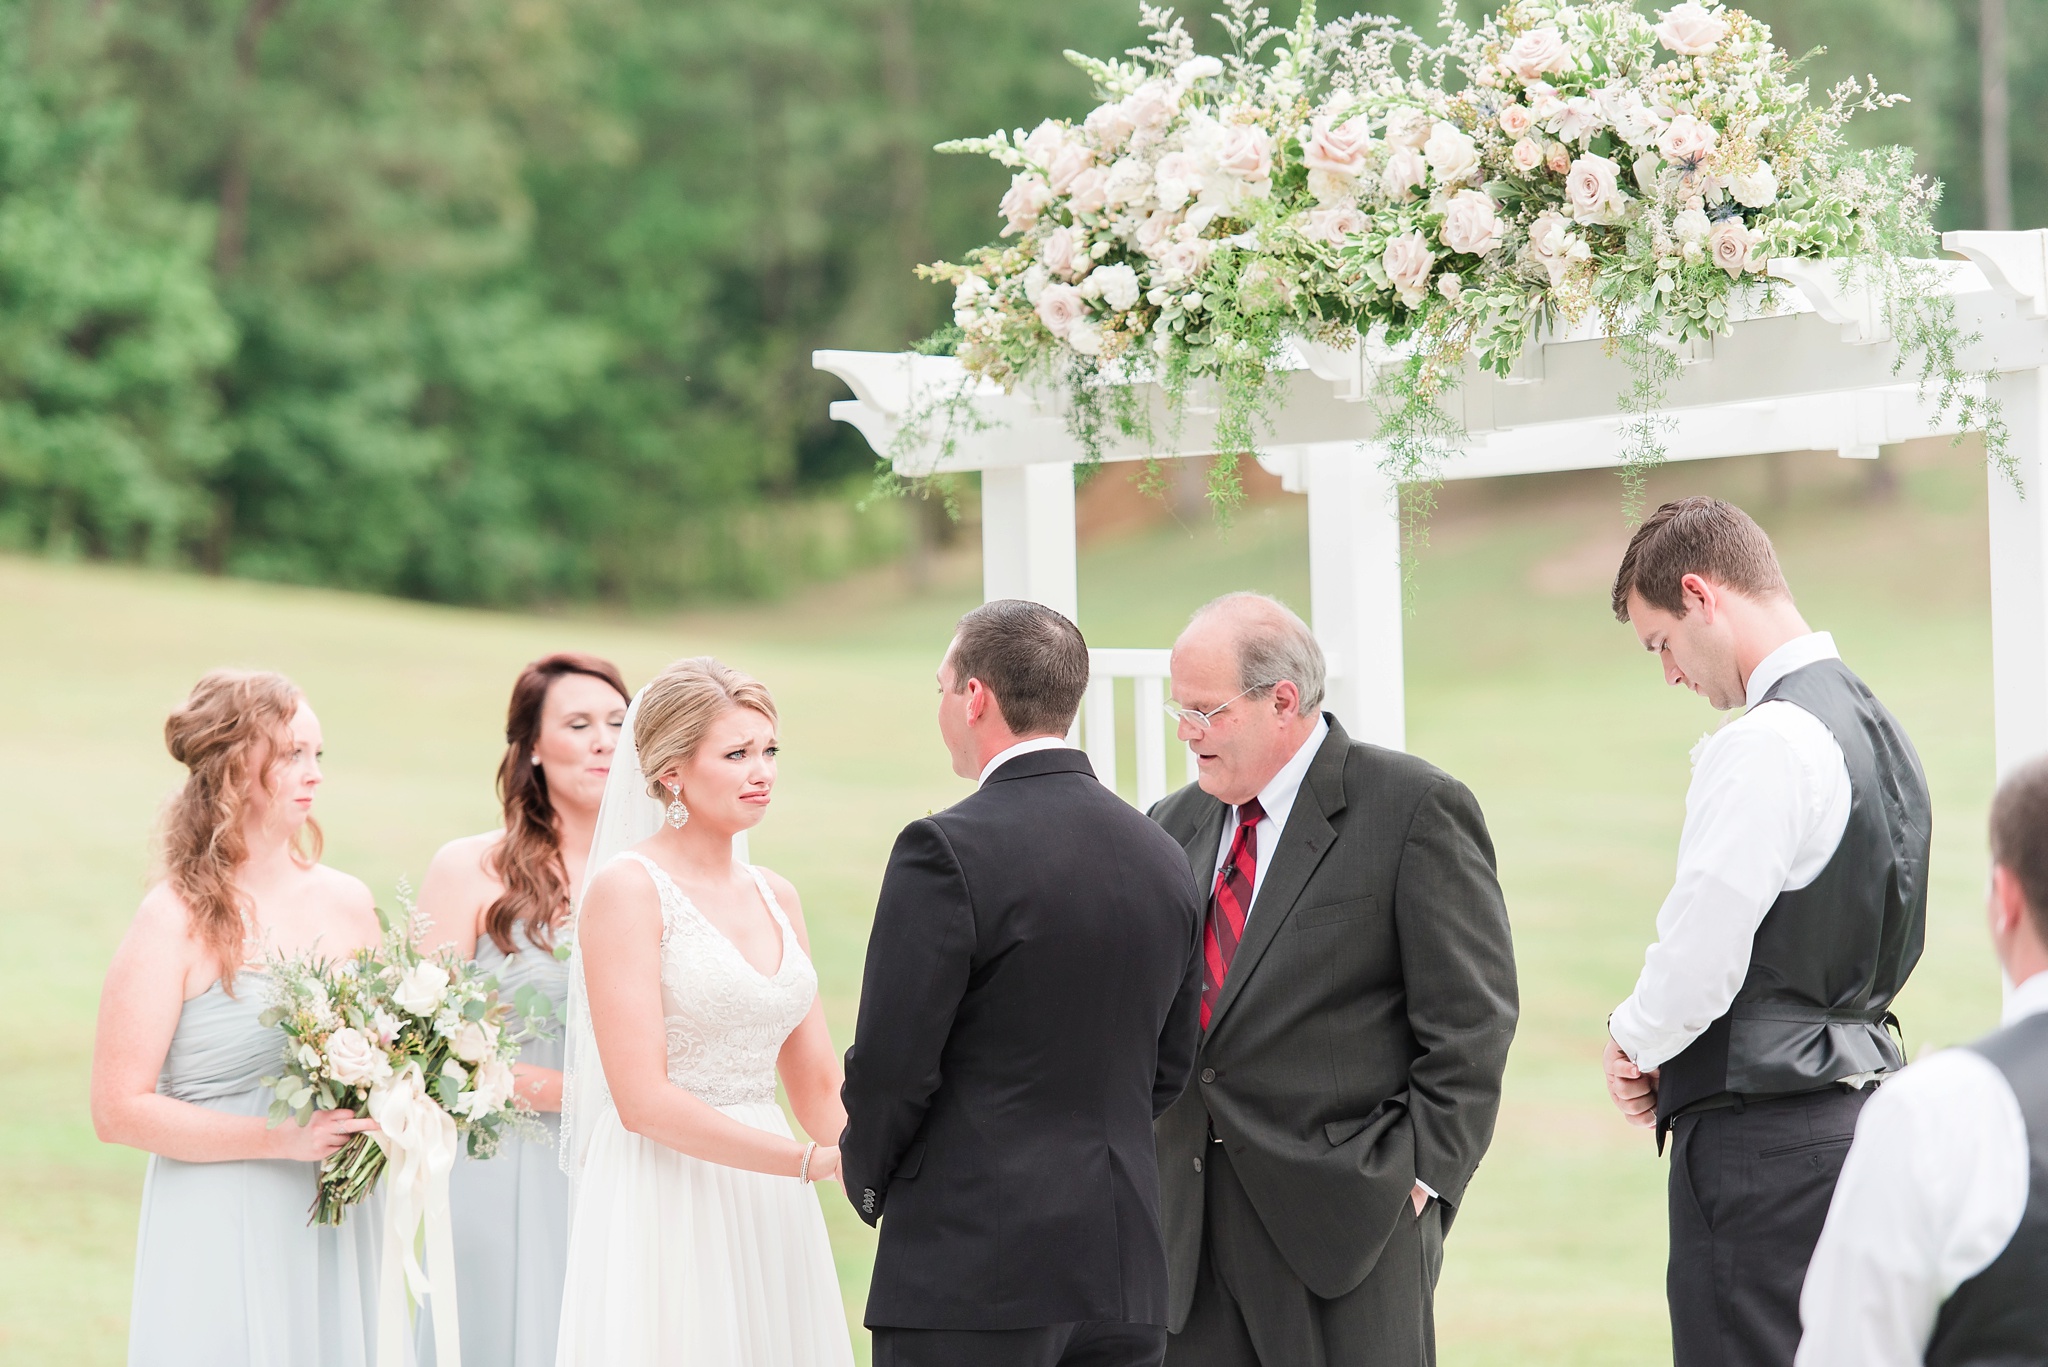 Gray and Black Classic Outdoor Wedding | Birmingham Alabama Wedding Photographers_0032.jpg